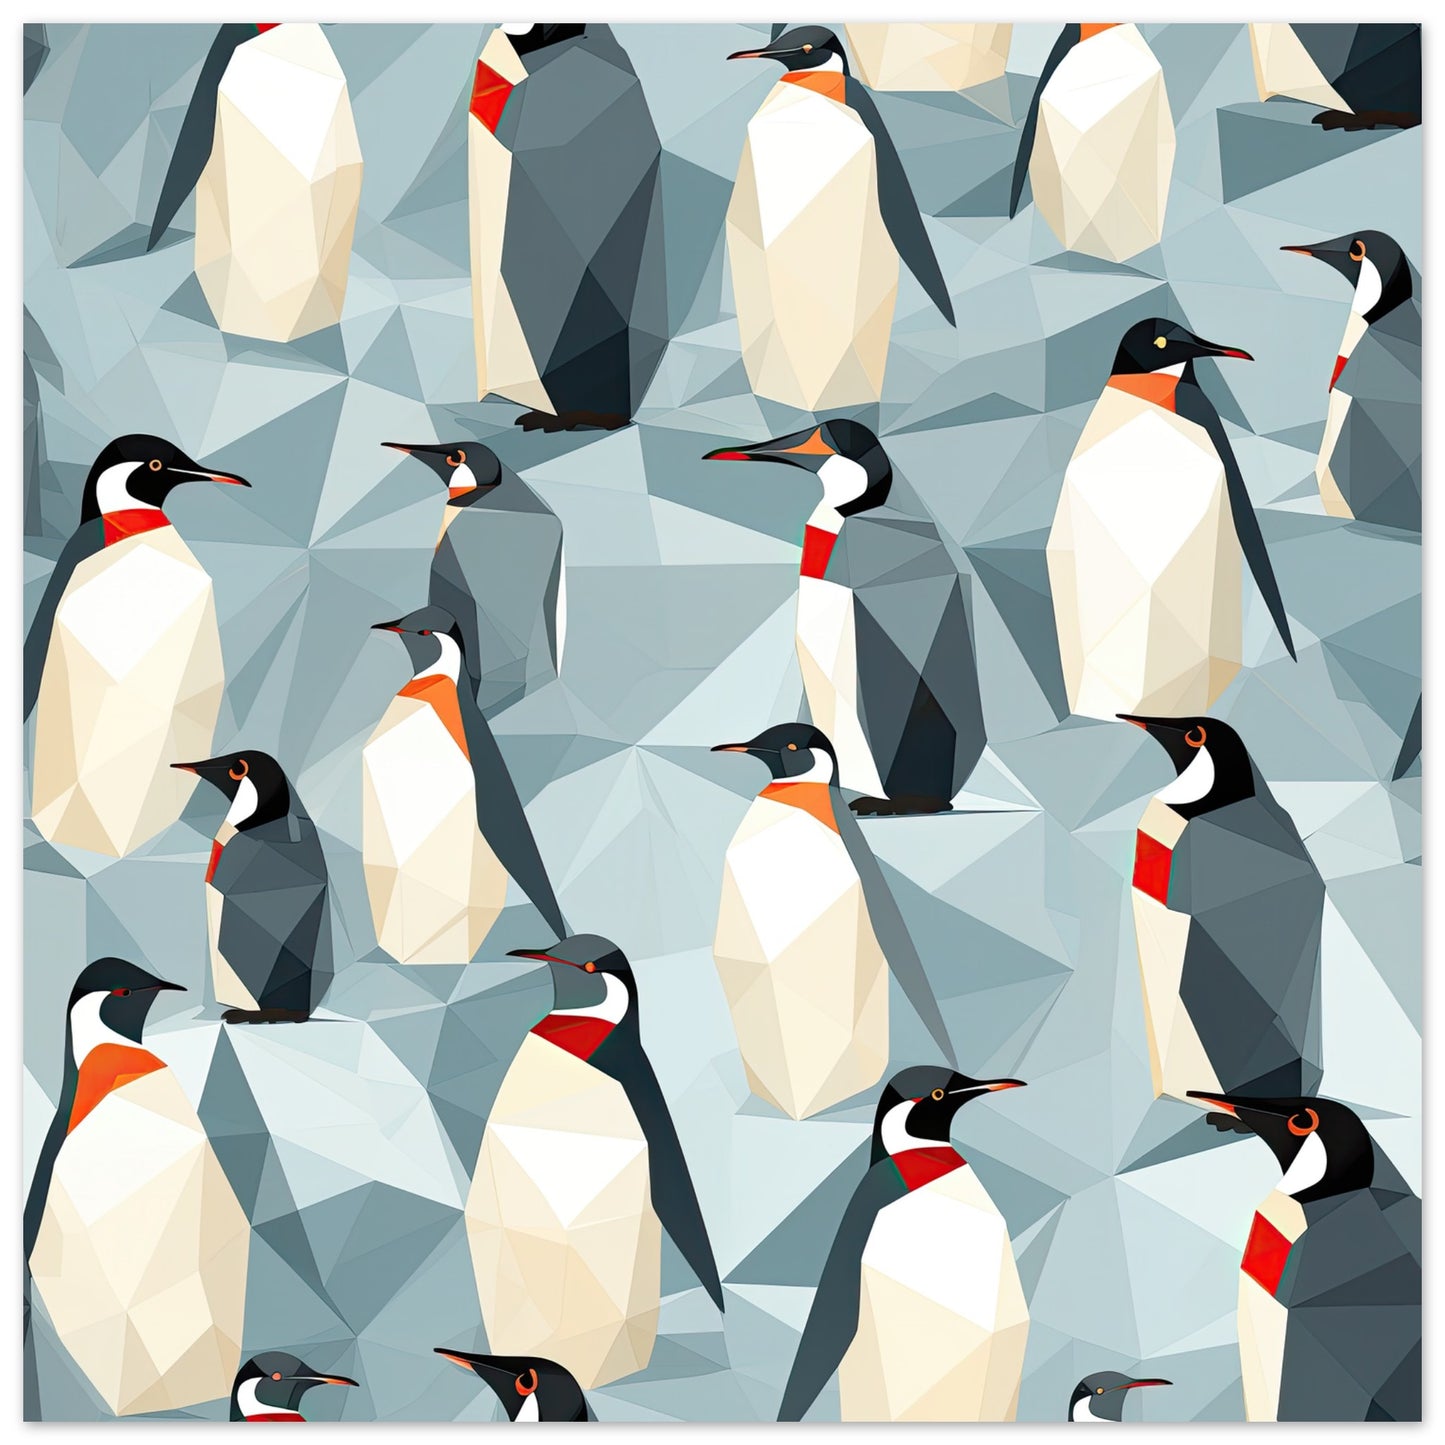 Penguin Convention Artwork AllStyleArt Matte Poster 70x70 cm / 28x28" 